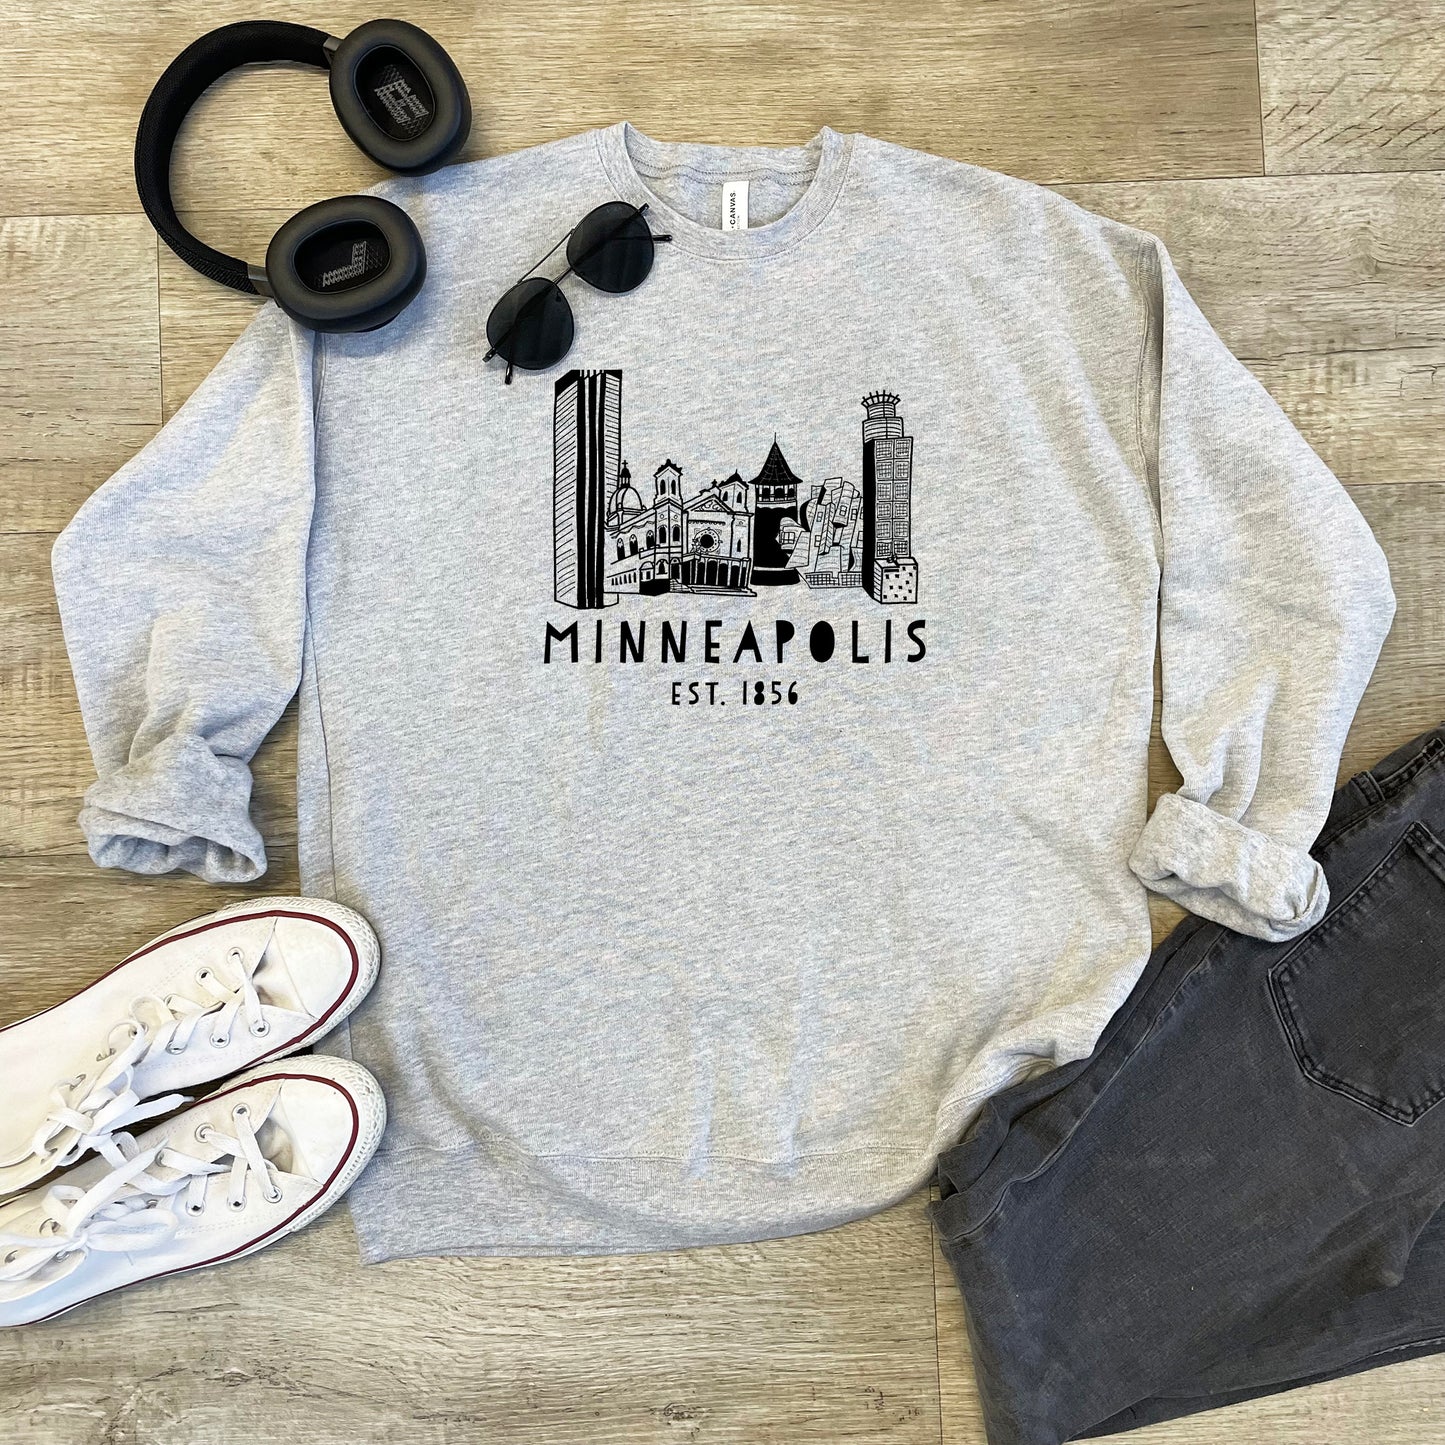 Minneapolis (MN) - Unisex Sweatshirt - Heather Gray or Dusty Blue